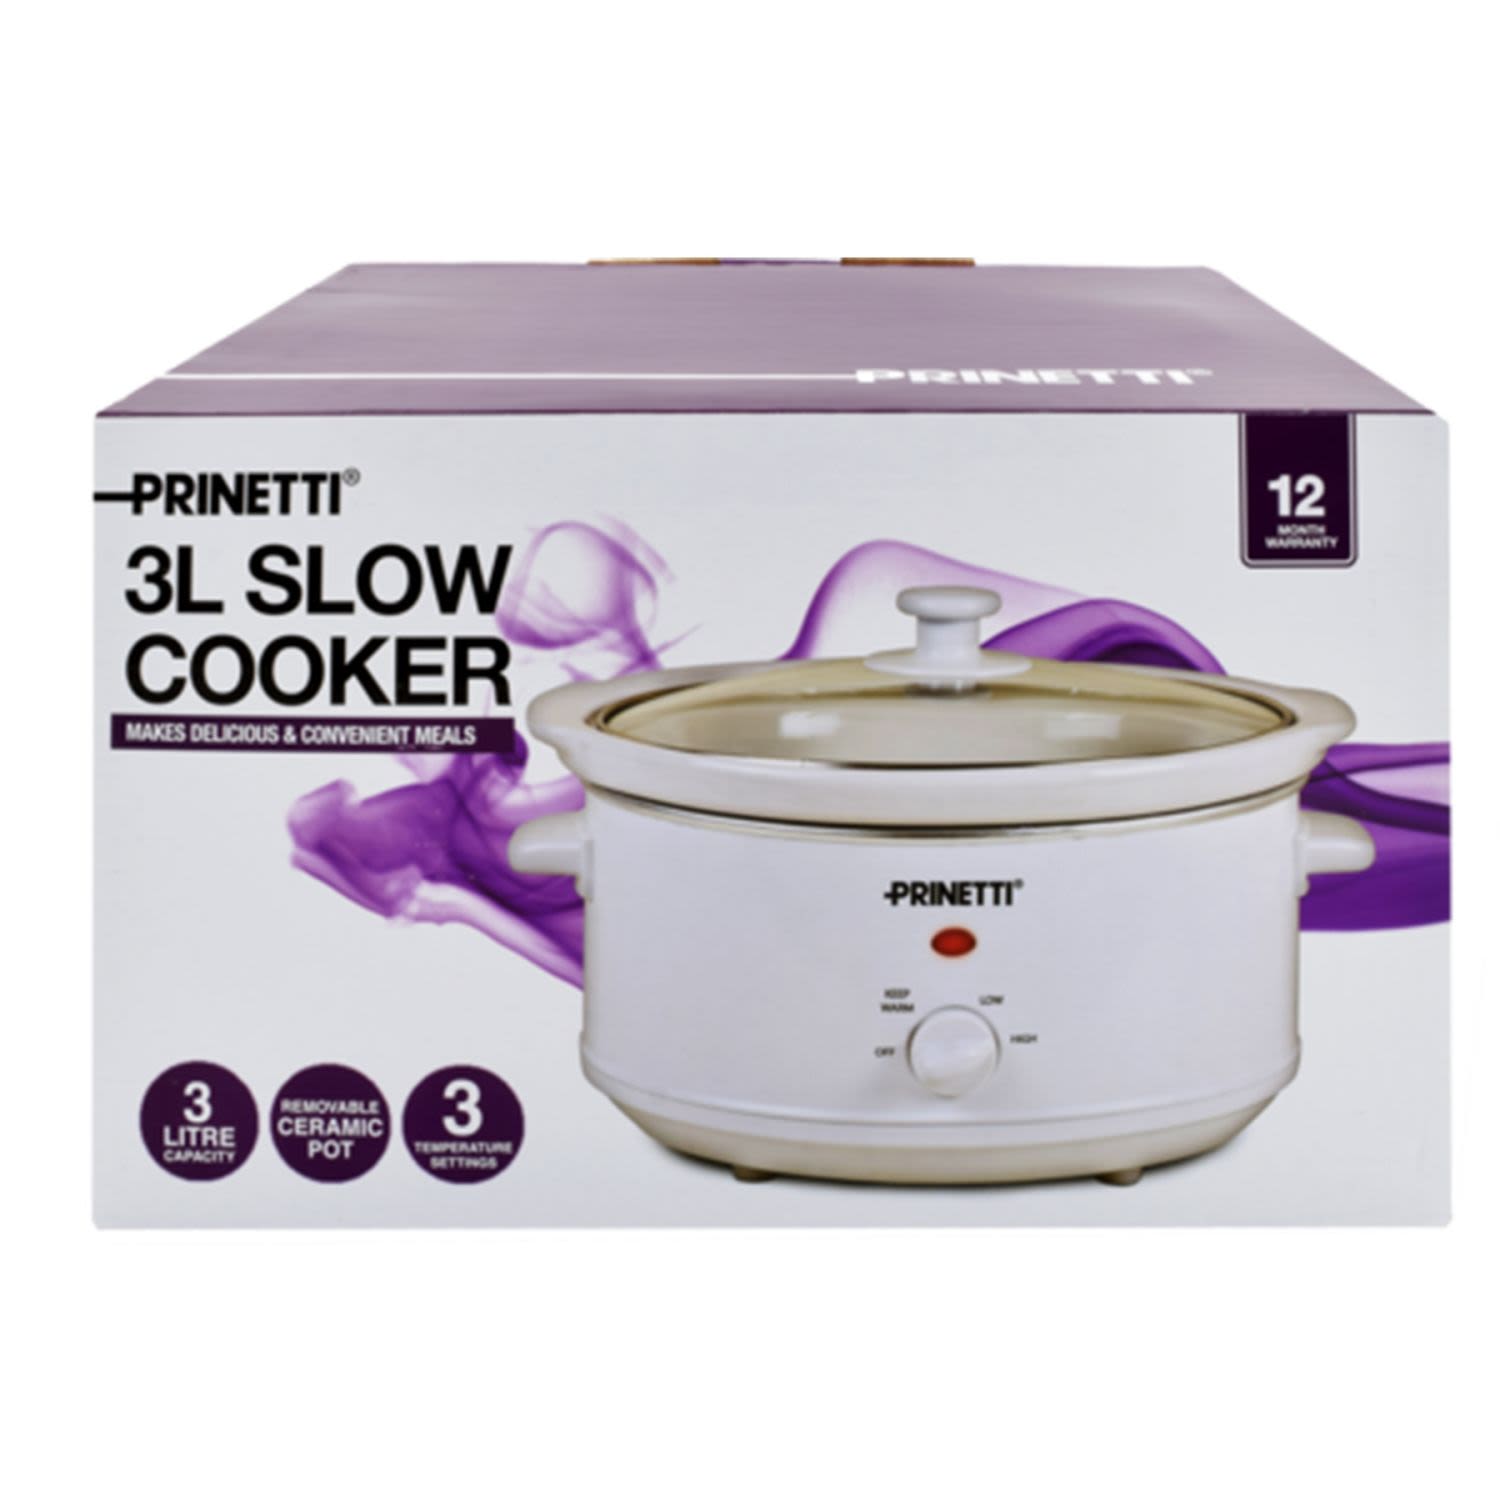 Prinetti Slow Cooker 3L, 1 Each